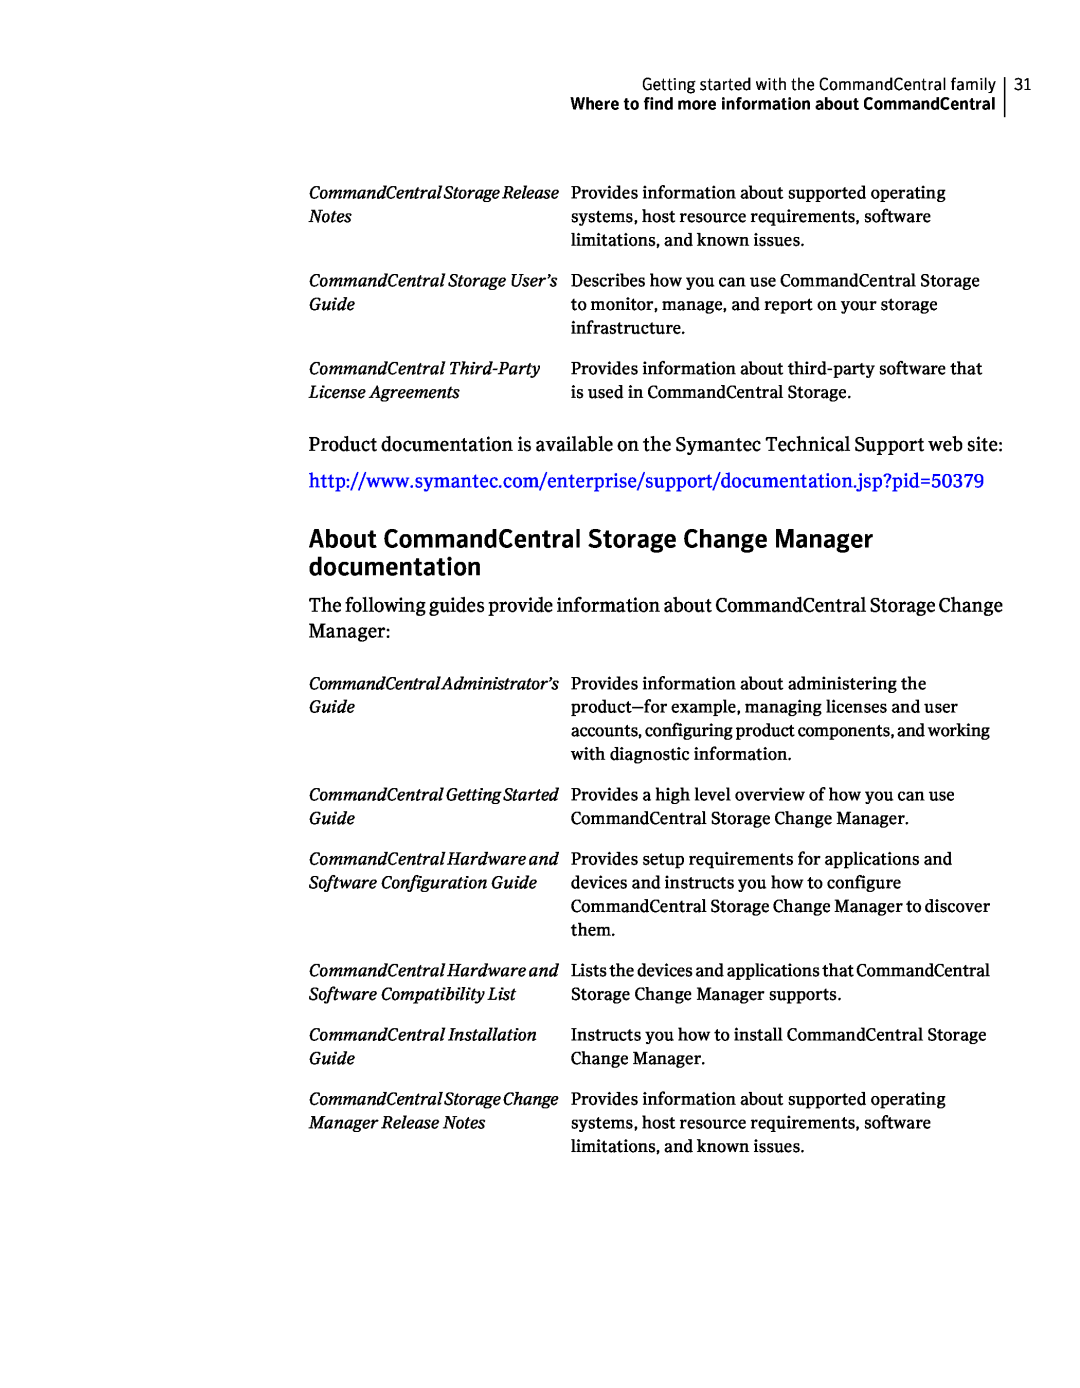 Symantec 5.1 manual About CommandCentral Storage Change Manager documentation 